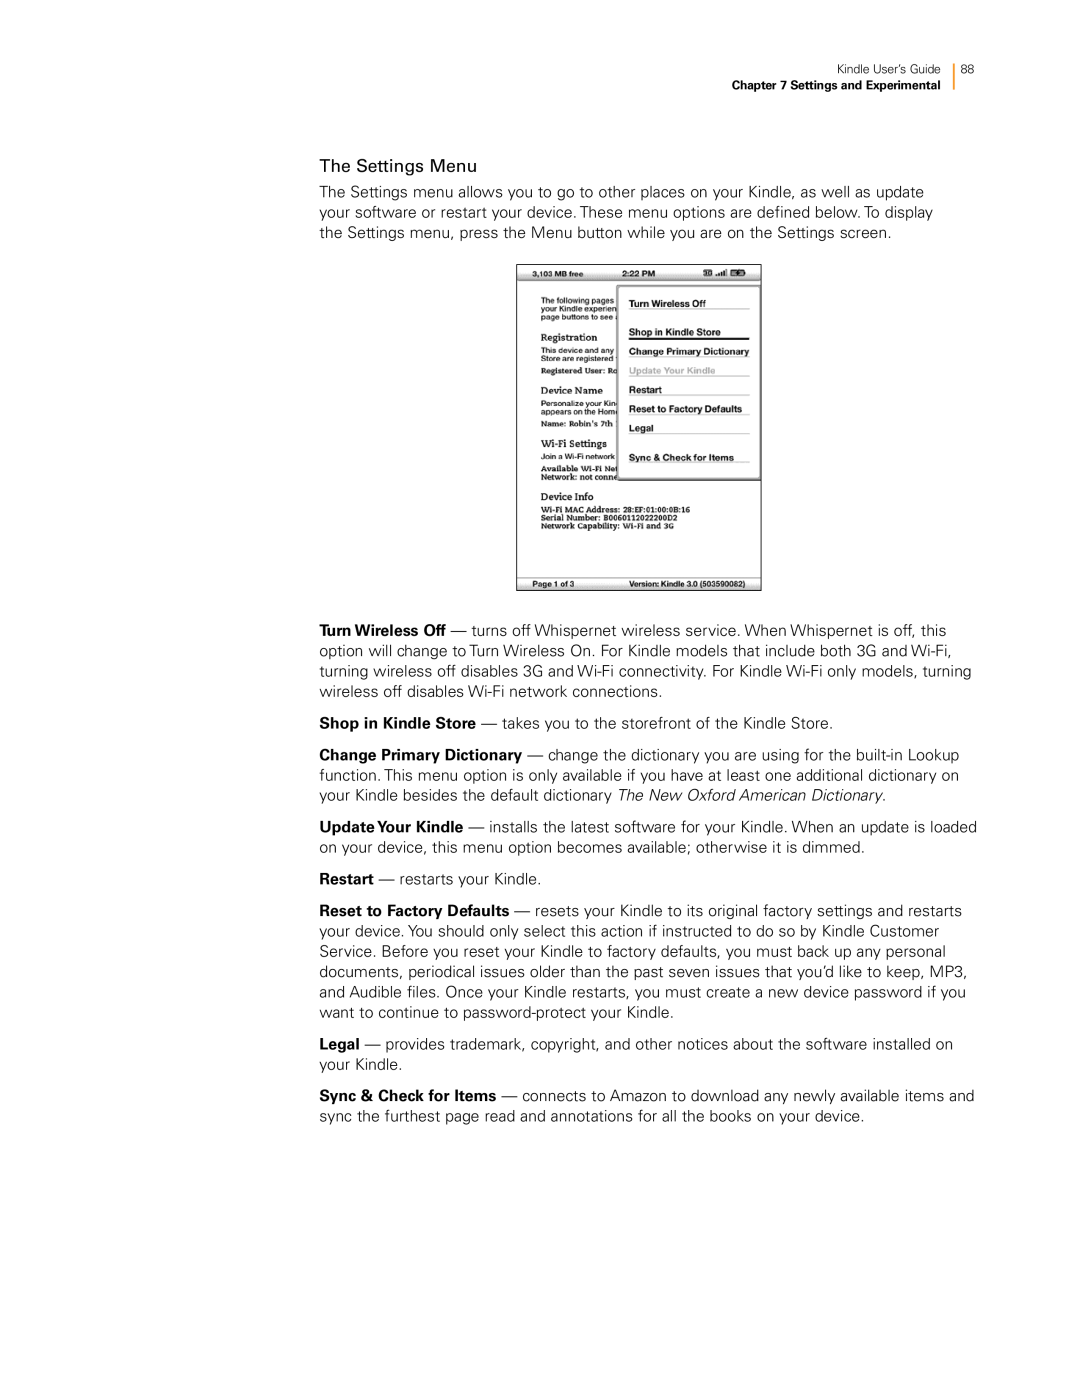 Amazon KNDKYBRD3G manual The Settings Menu 